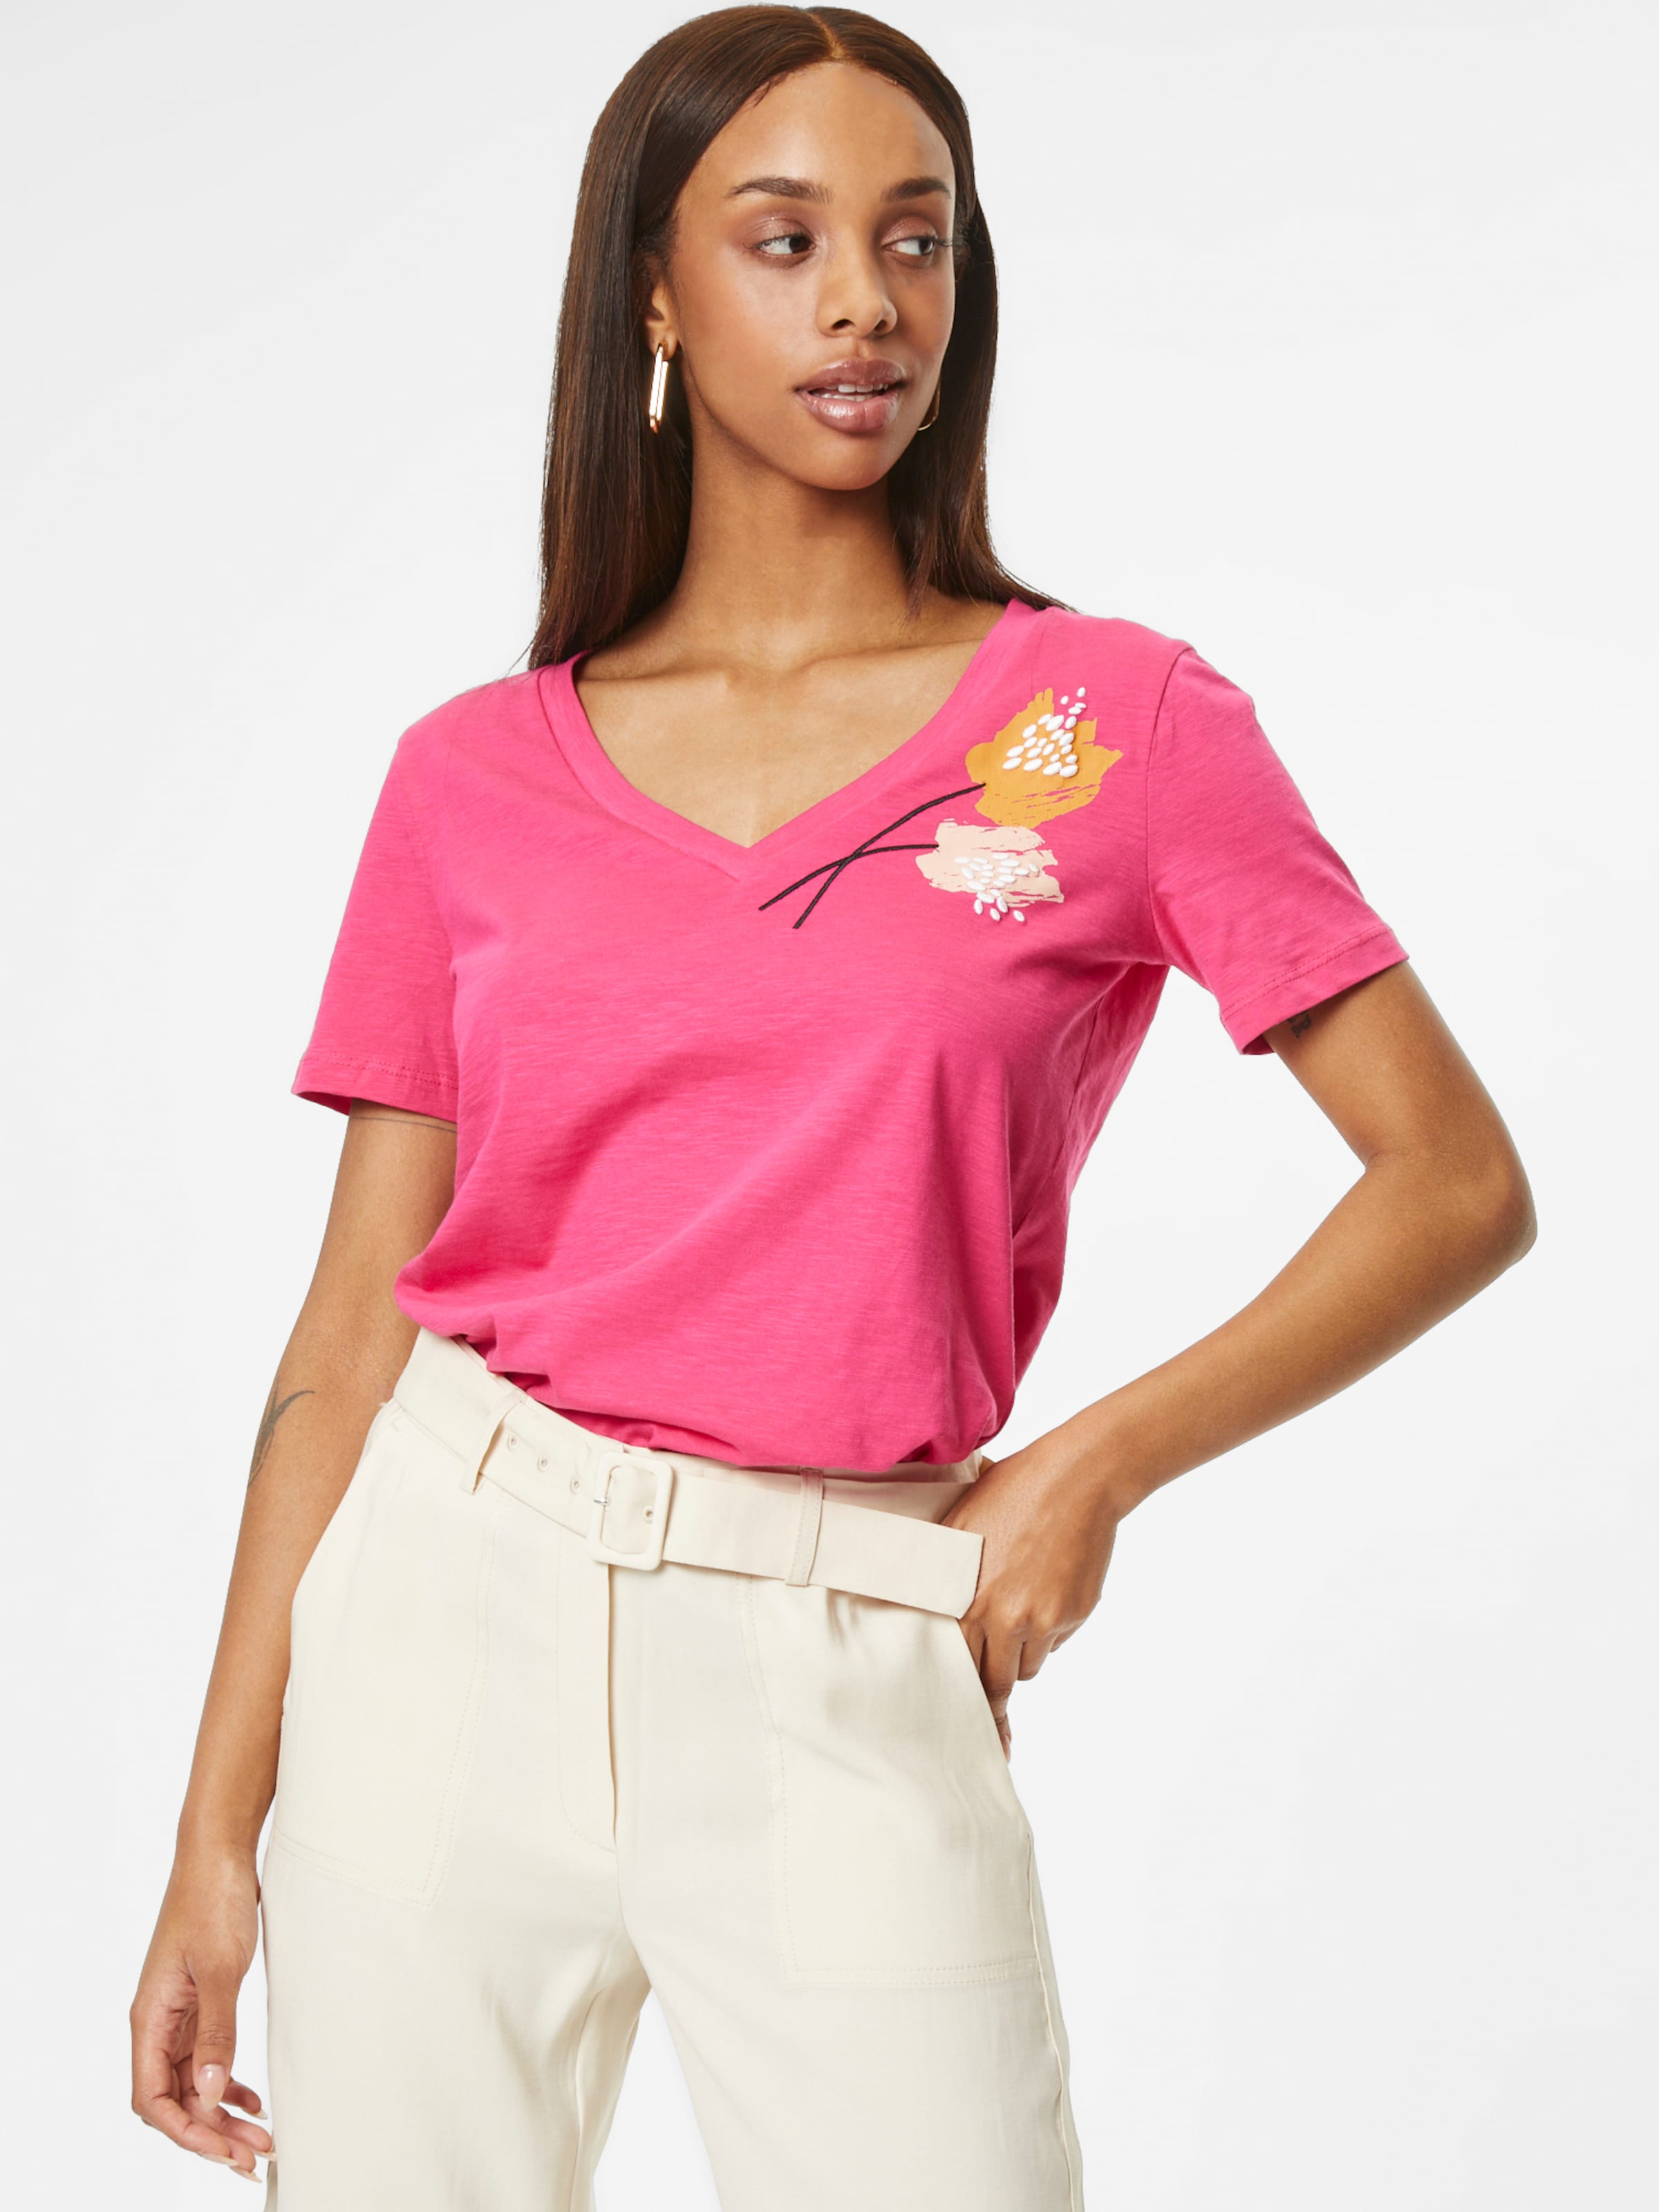 Frauen Shirts & Tops TAIFUN T-Shirt in Pink, Hellpink - UM03133